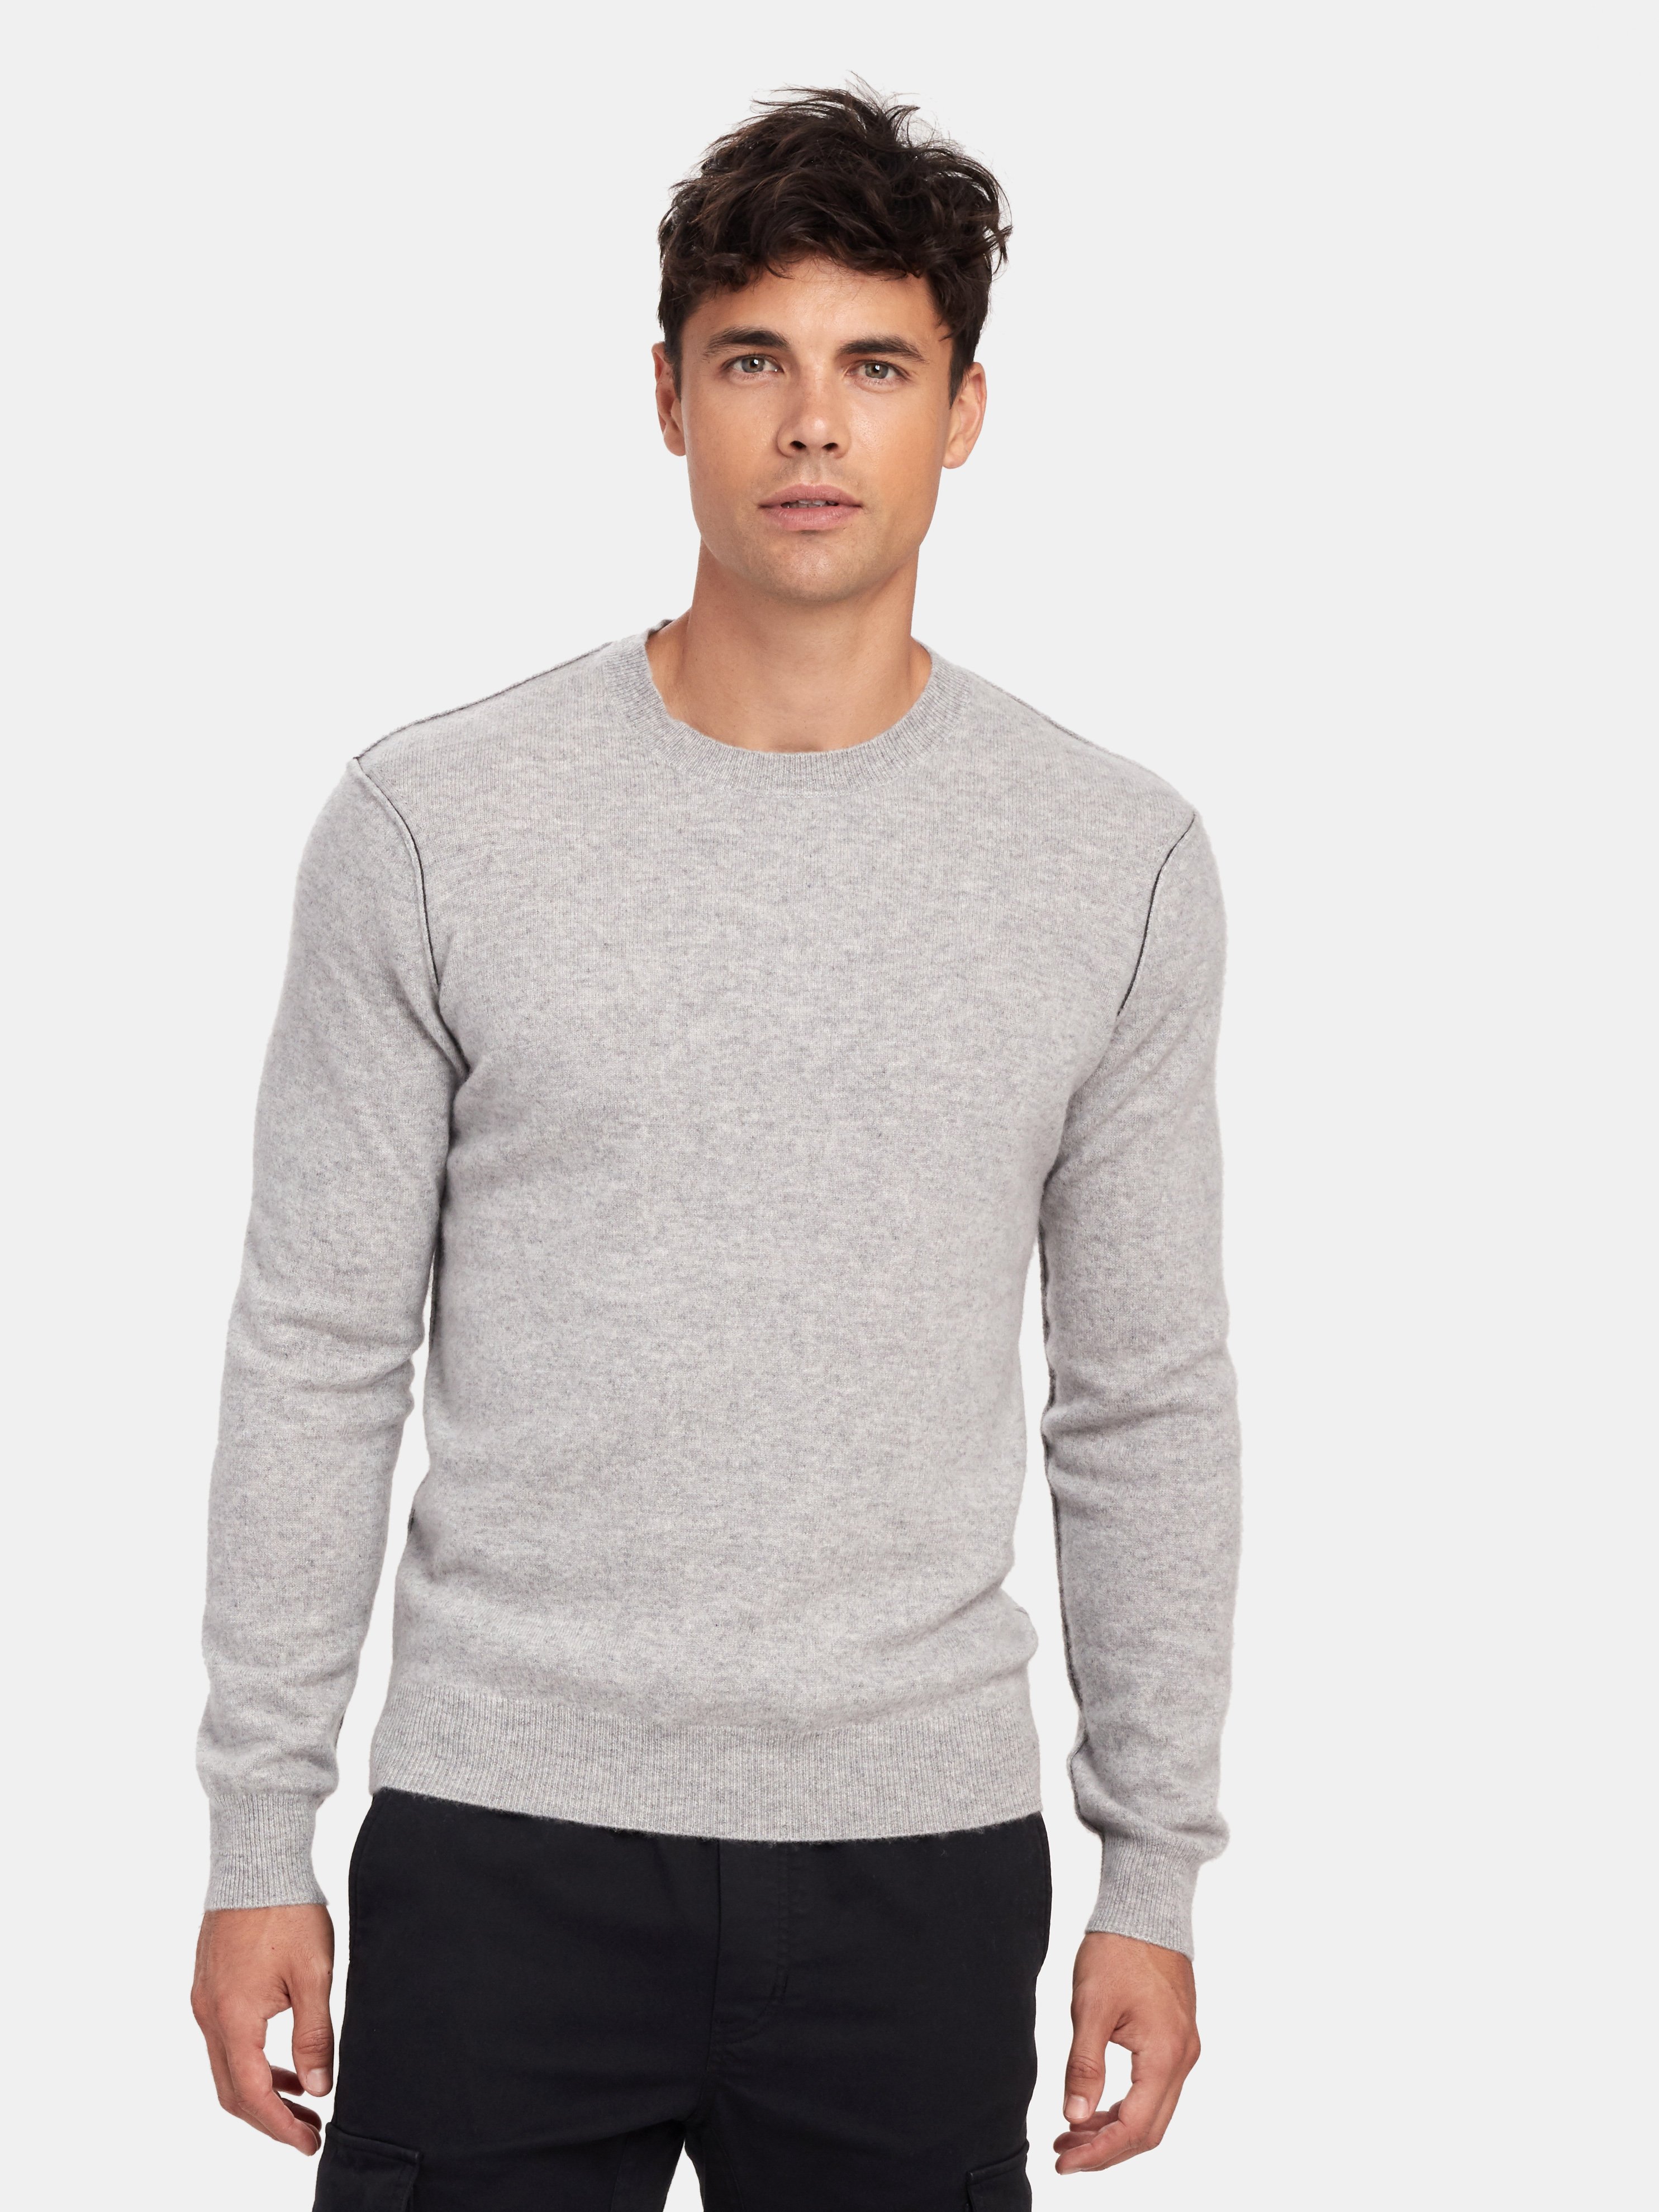 Spirio Mens Contrast Color Crewneck Knitwear Fashion Pullover Sweater